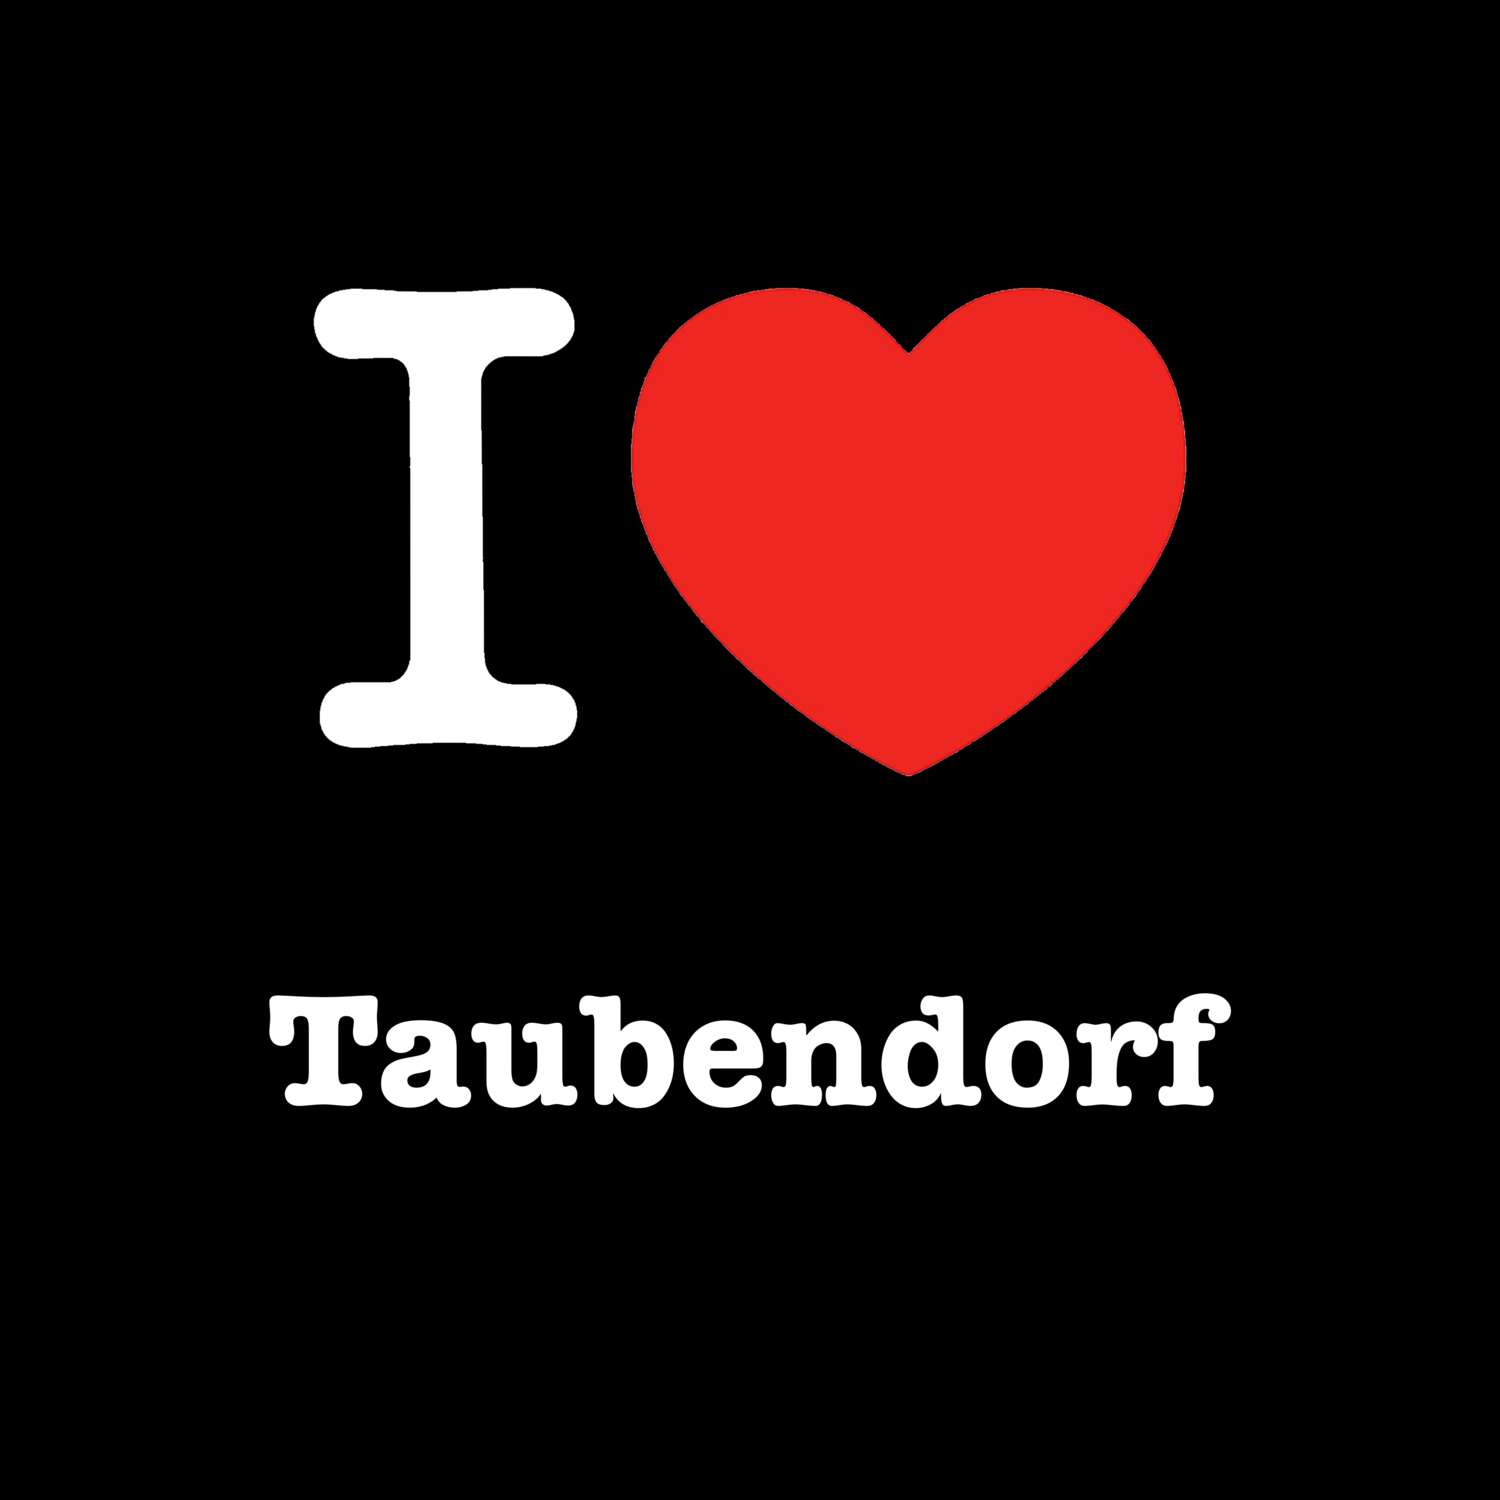 Taubendorf T-Shirt »I love«